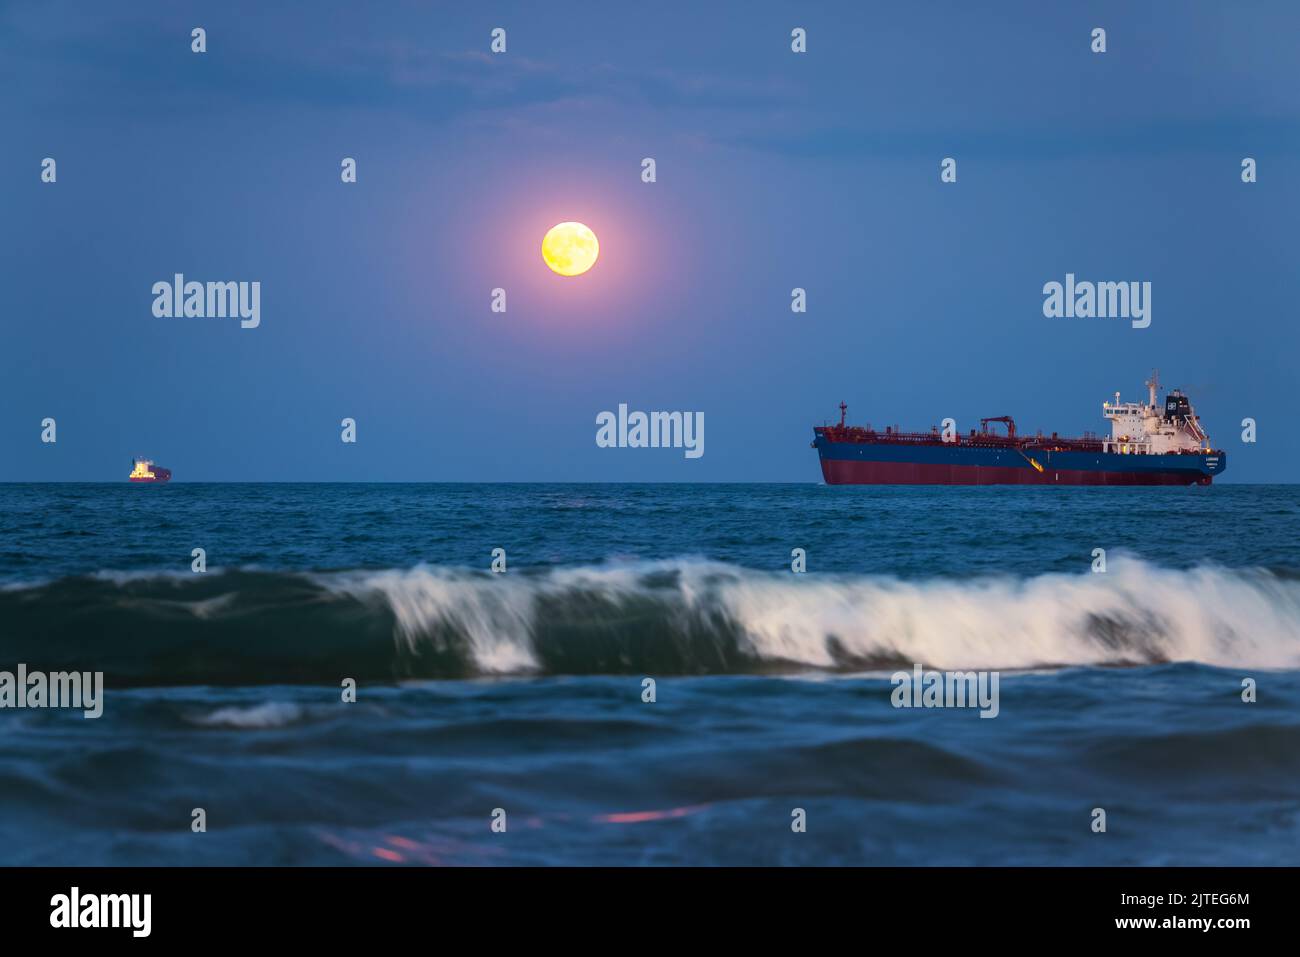 Sailing ship and Moonlight Night Sea Stock Photo